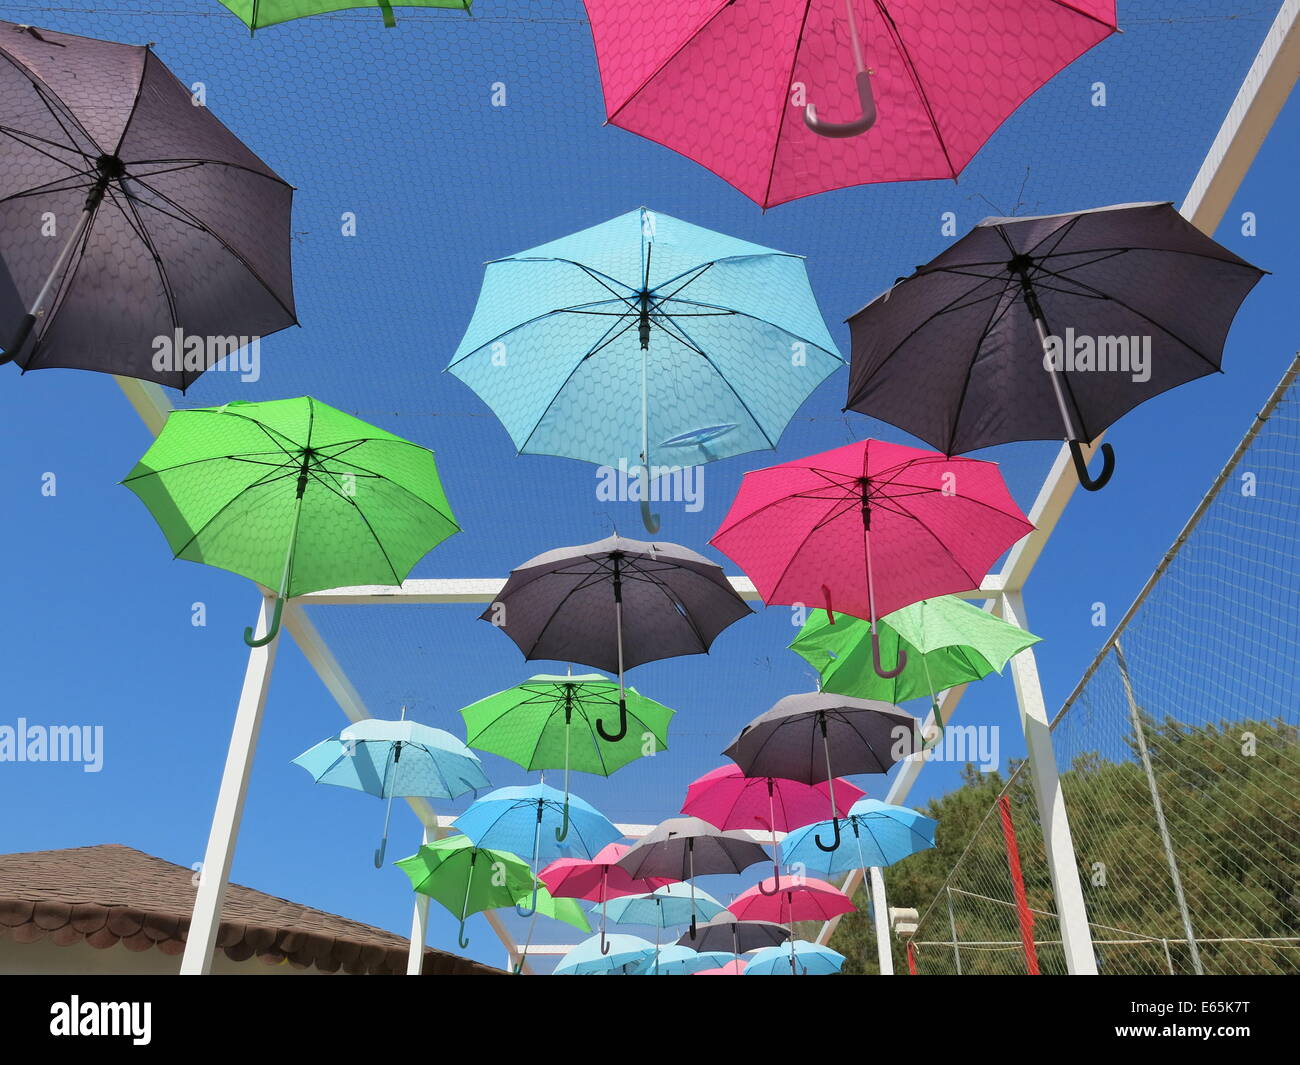 Skulptur mit bunten Schirmen gemacht. Konzept: Dekoration. Stockfoto